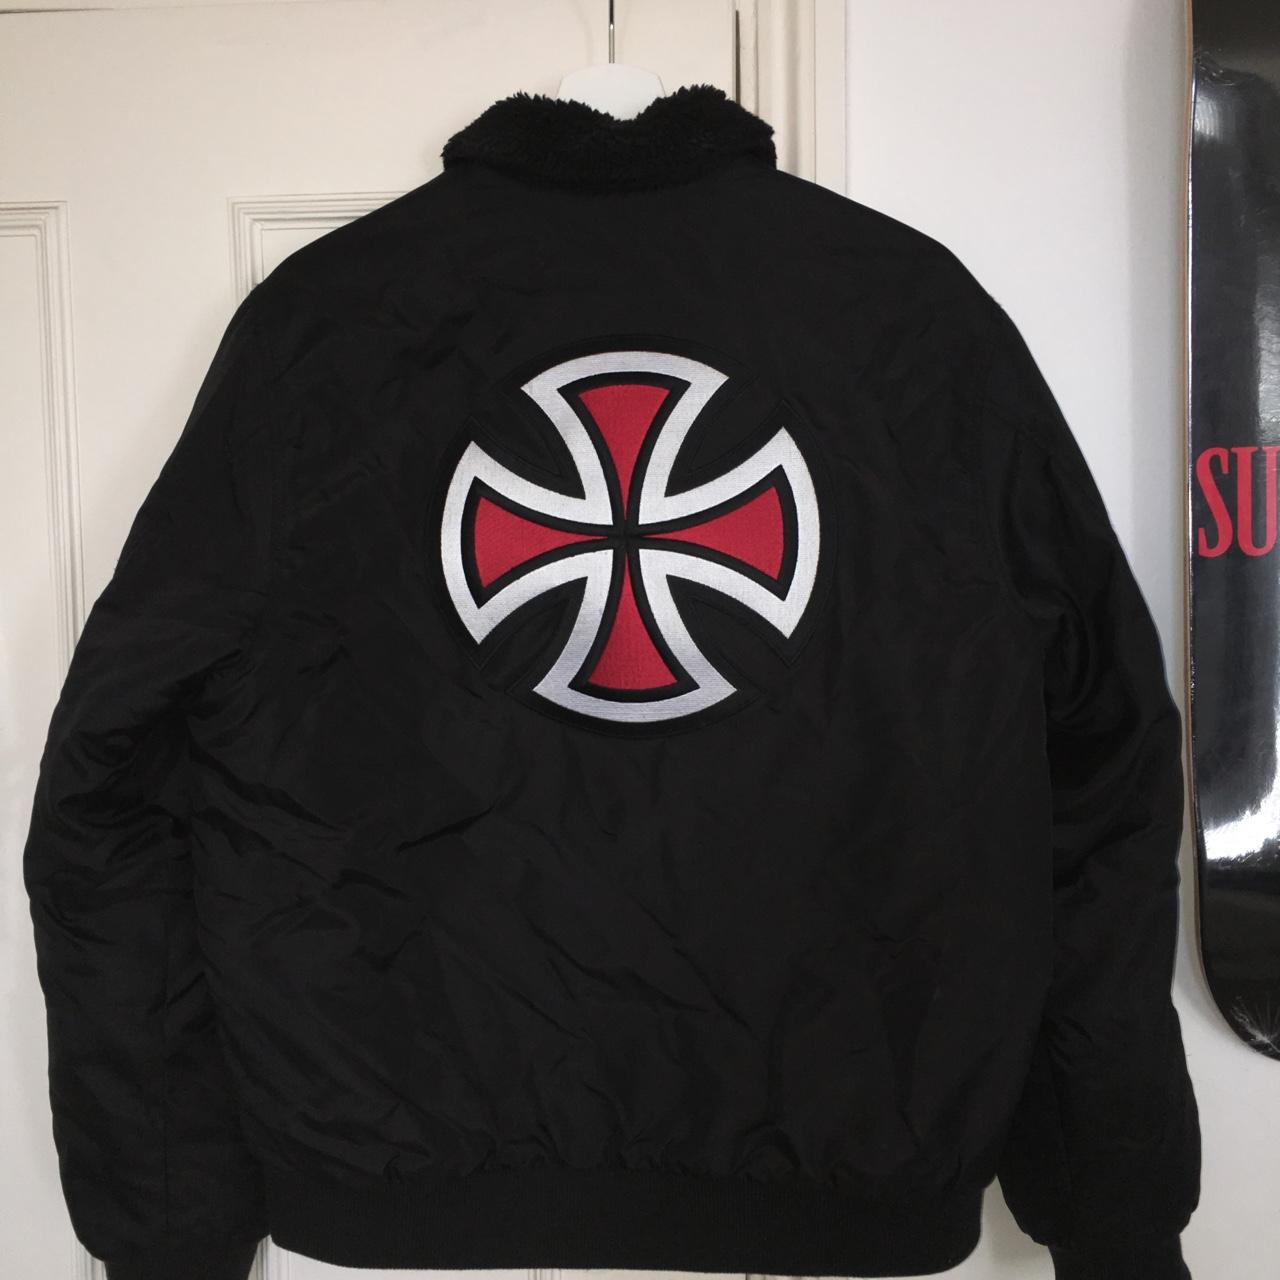 Supreme x independent bomber jacket very nice high... - Depop